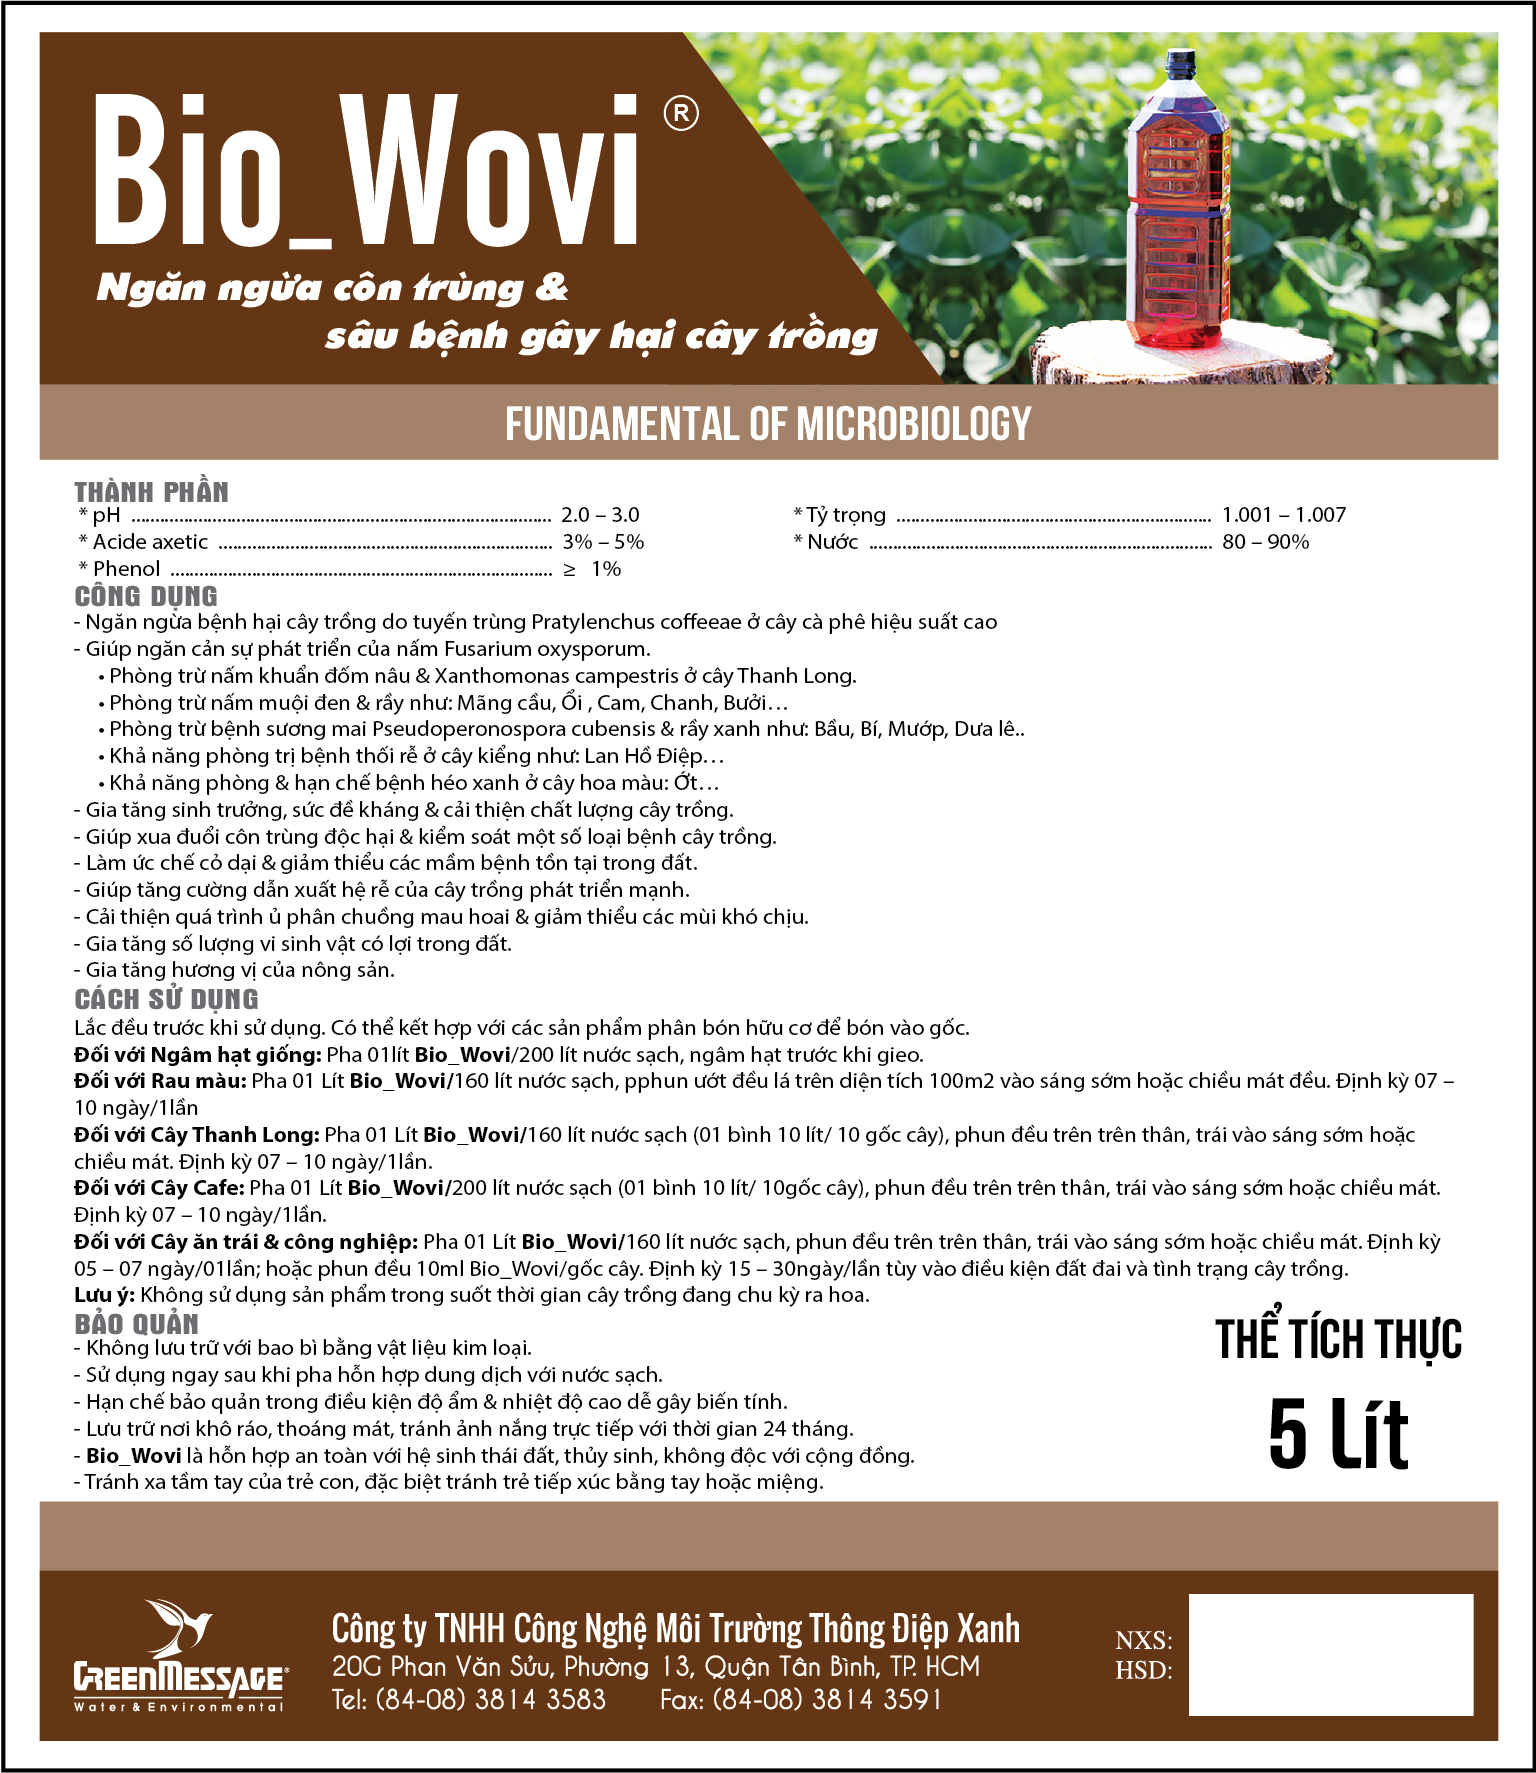 Bio_Wovi (vegetables, crops)